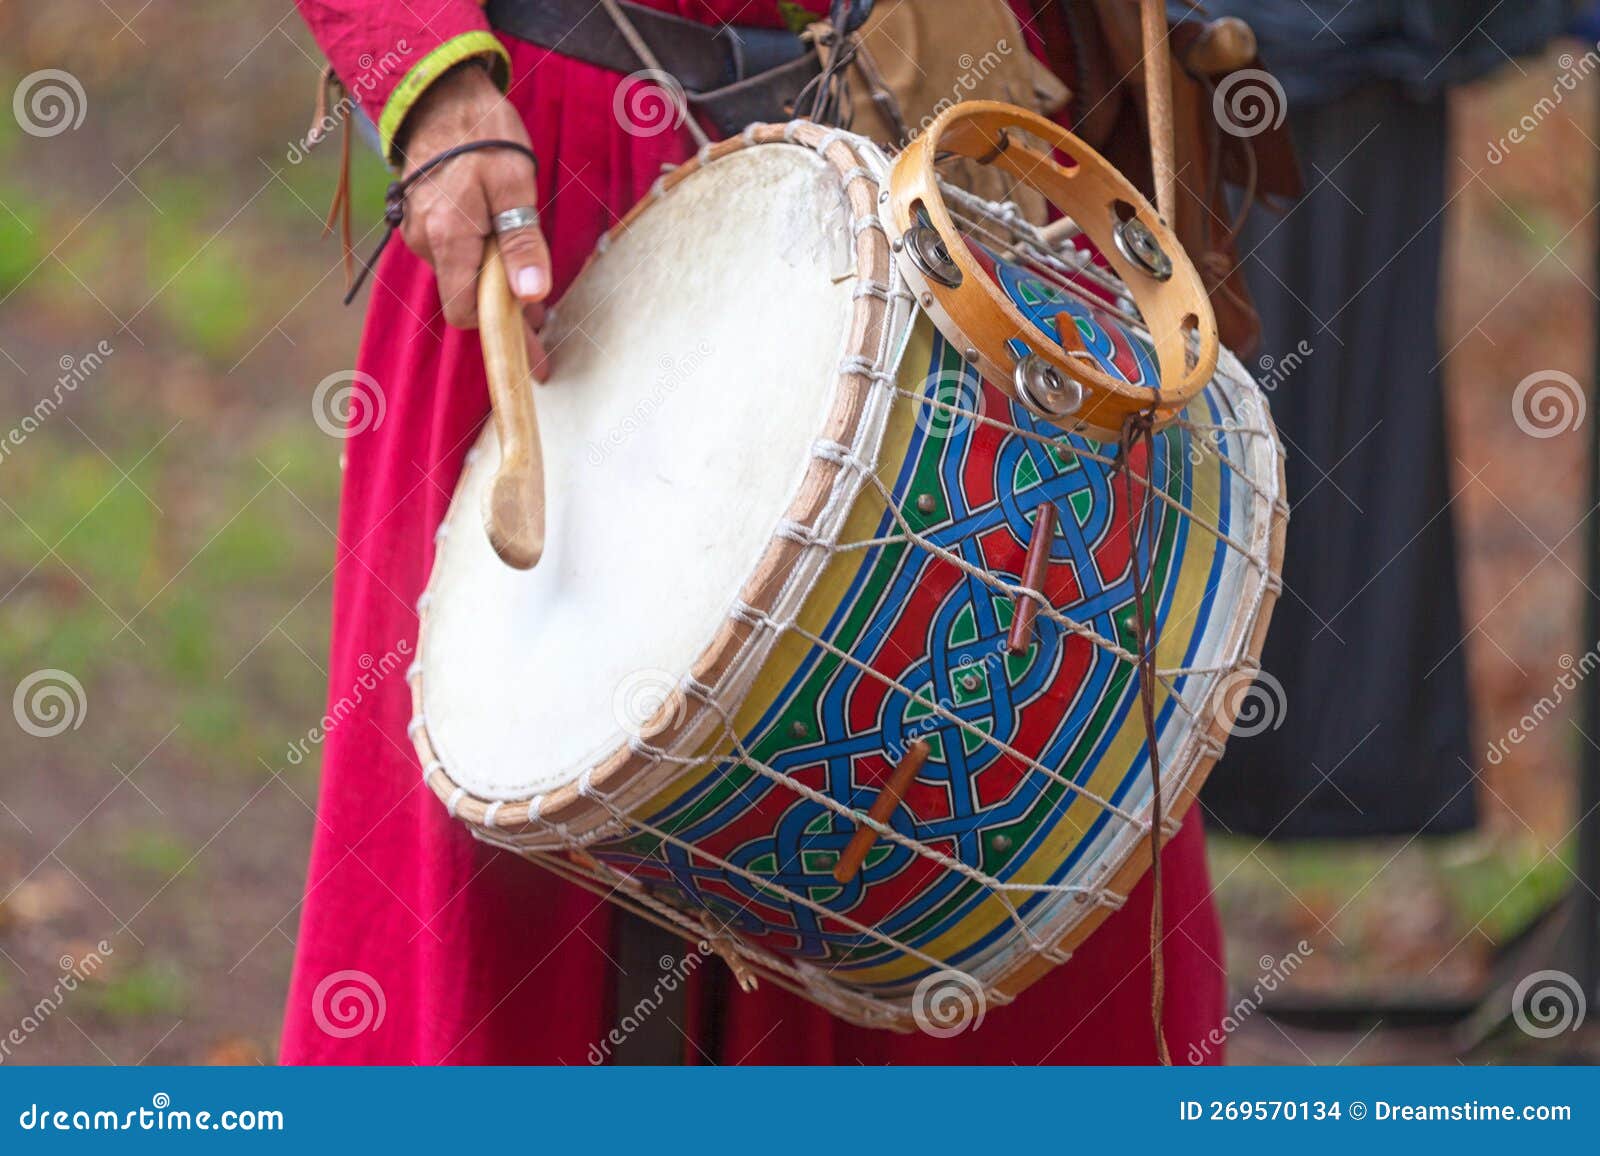 medieval minstrel playing drum